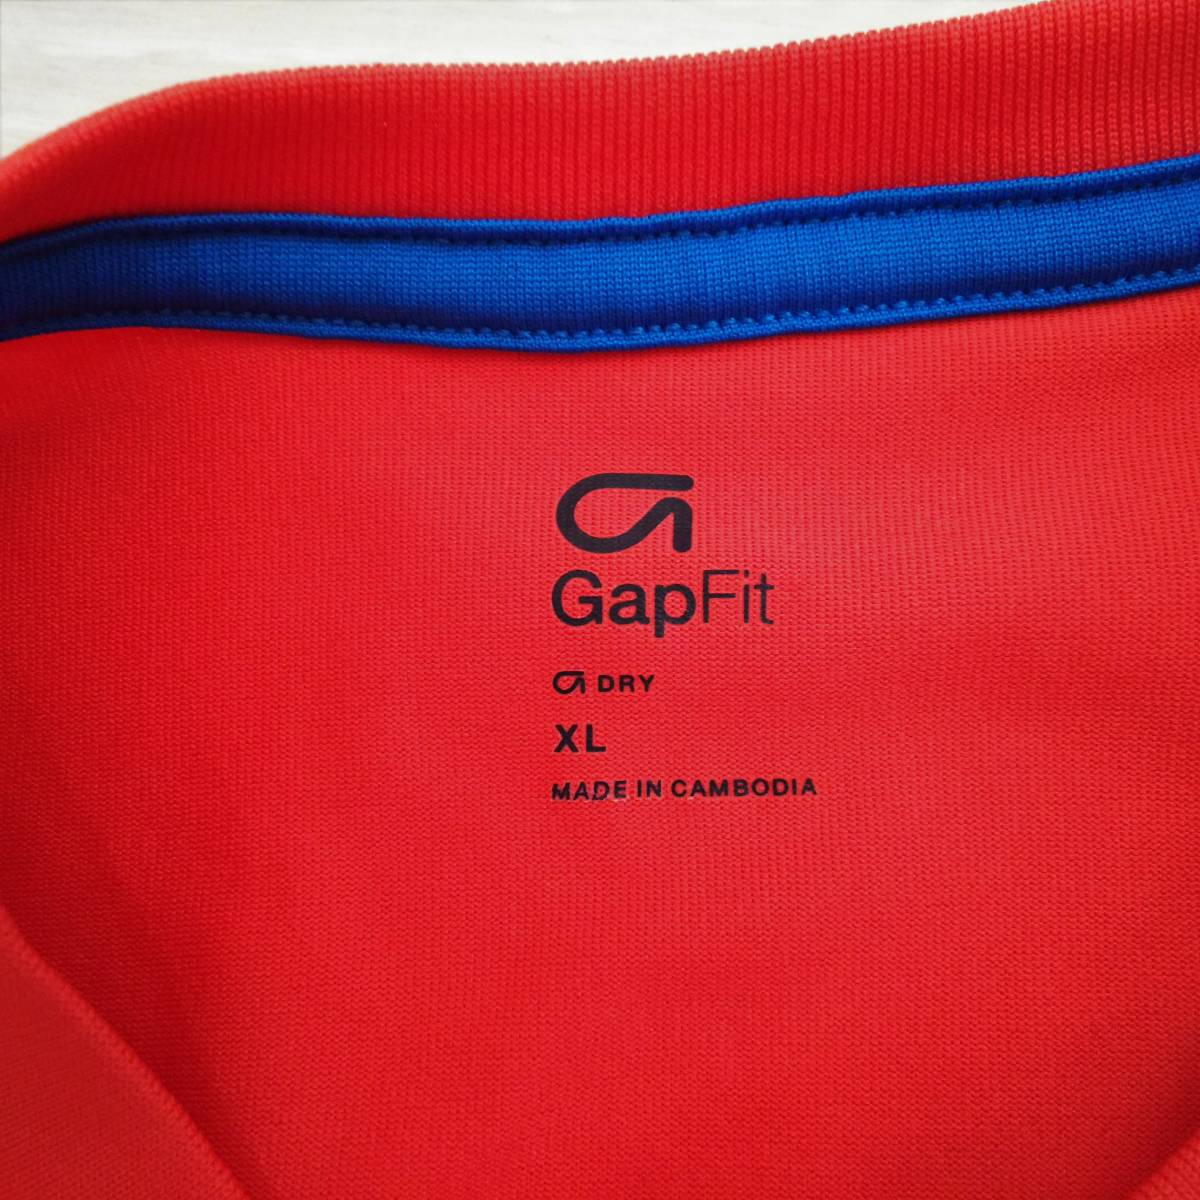 *GapFit Gap Fit длинный рукав спорт рубашка XL(150 размер ) скорость ./ dry *